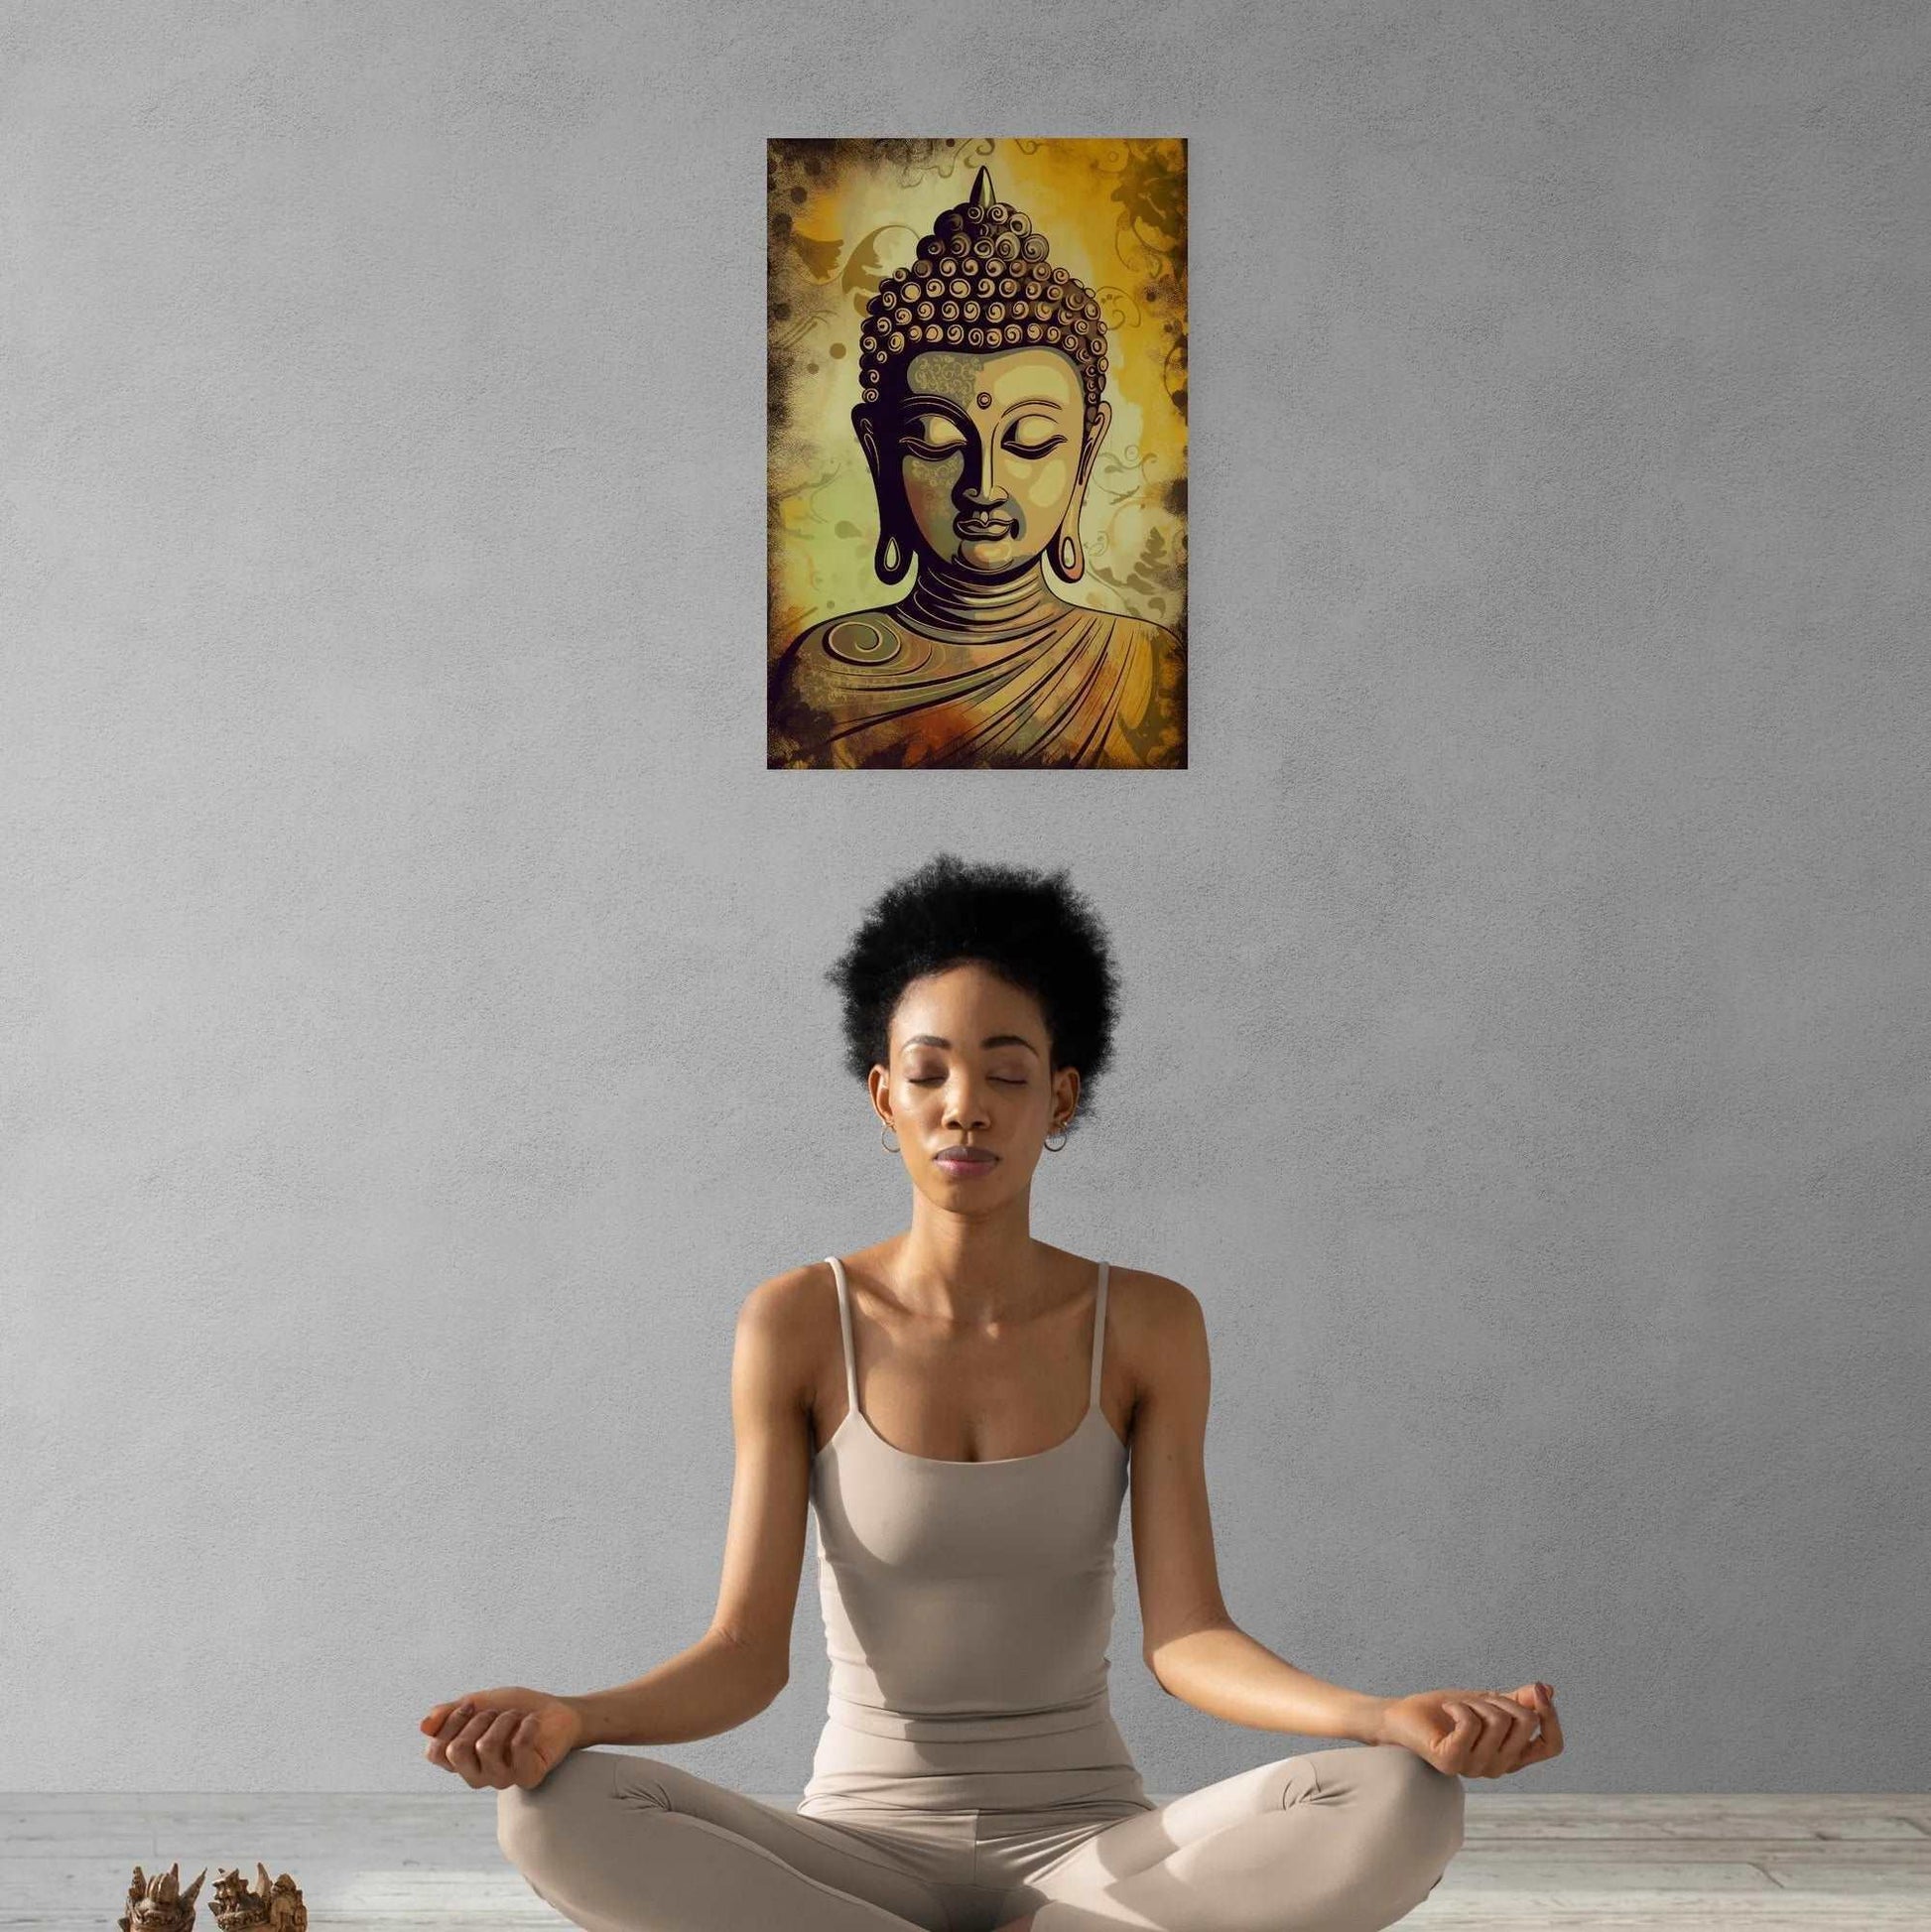 Shop Buddha Poster: Harmonious Buddha Head Illustration in Warm Tones